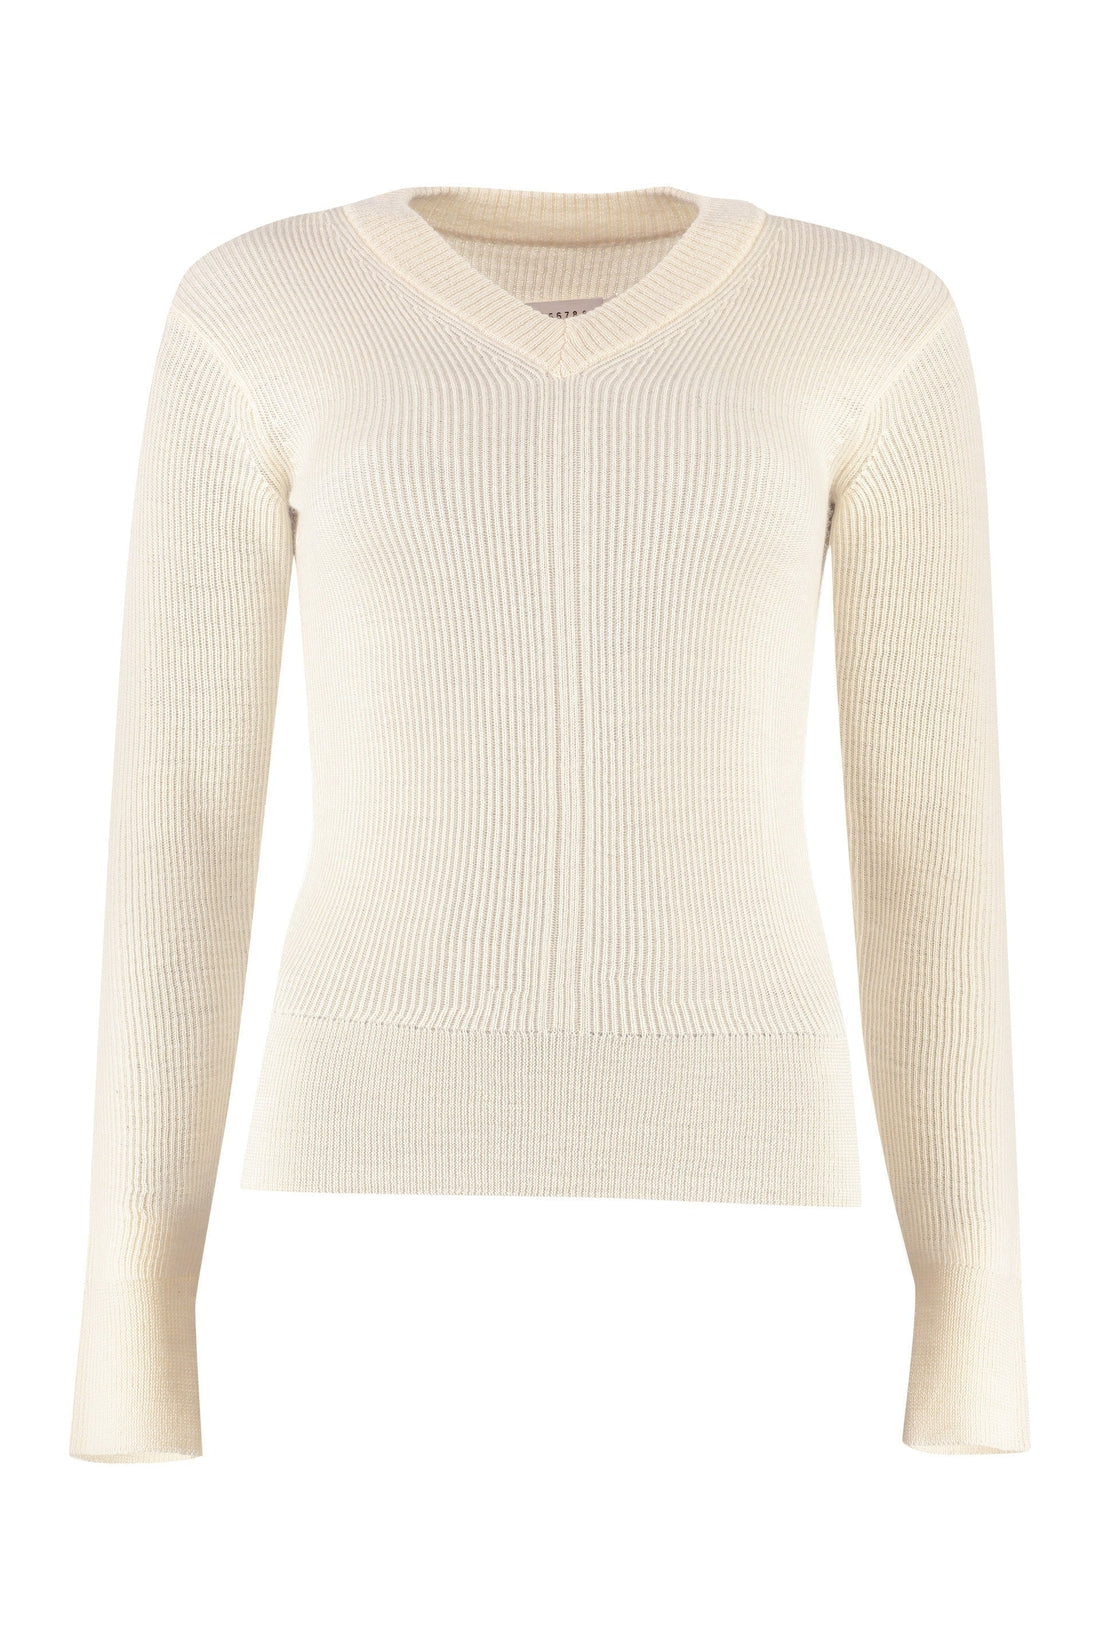 Maison Margiela-OUTLET-SALE-Ribbed sweater-ARCHIVIST